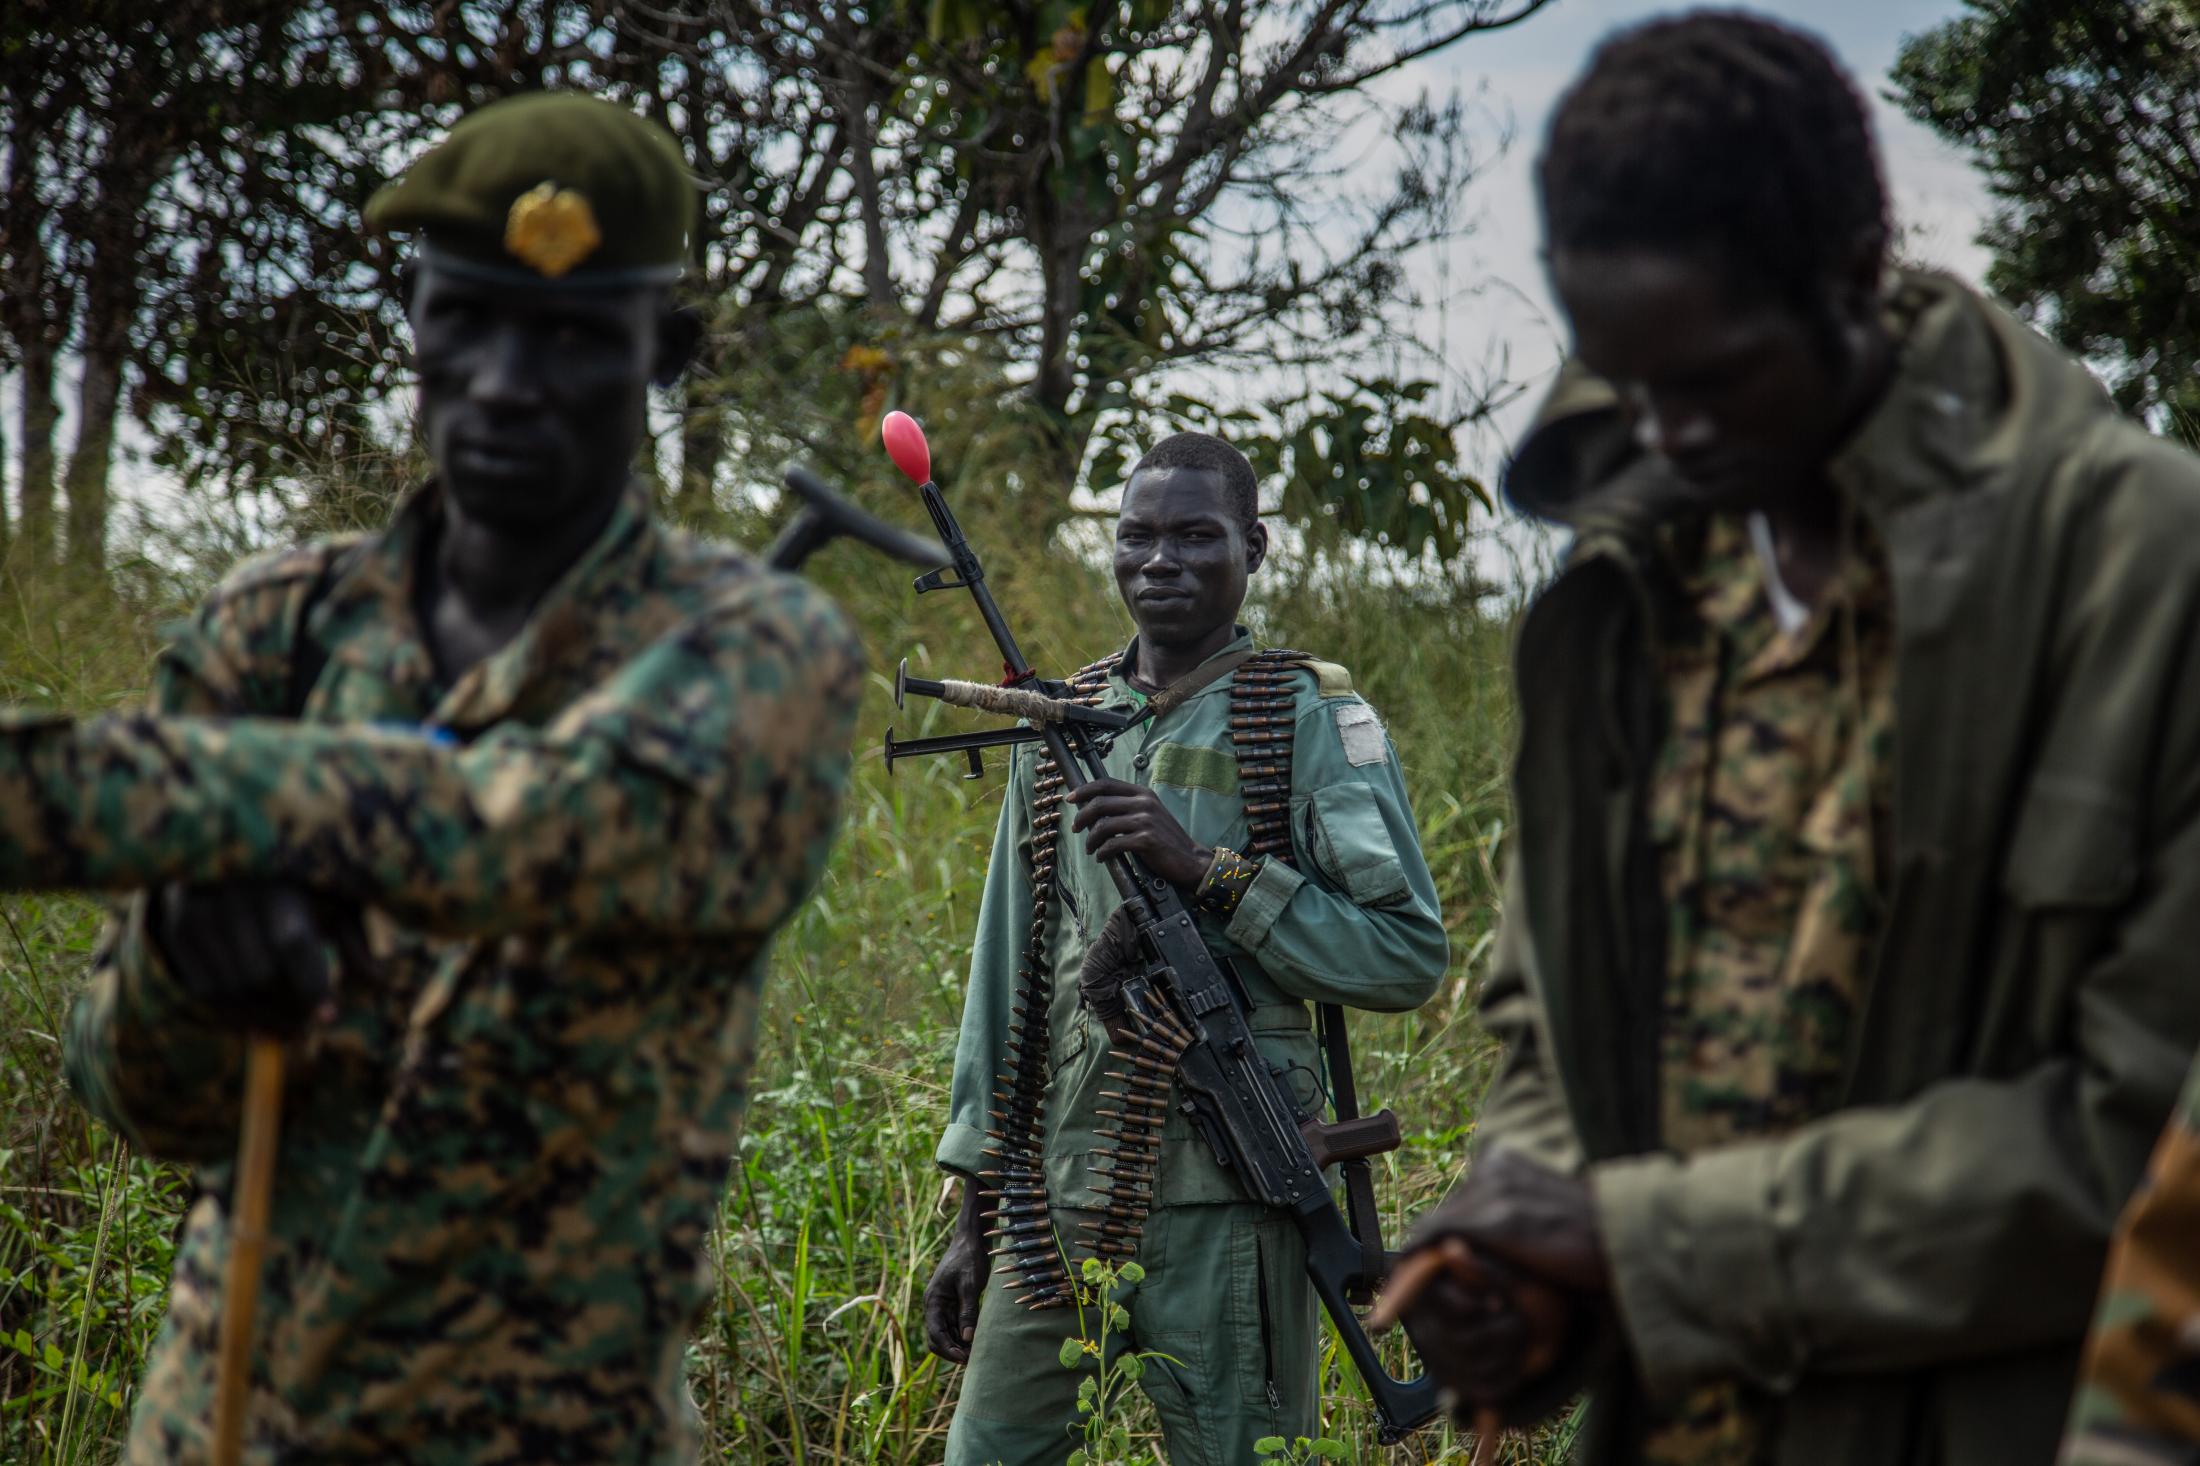 Embed with SPLA-IO, South Sudan 